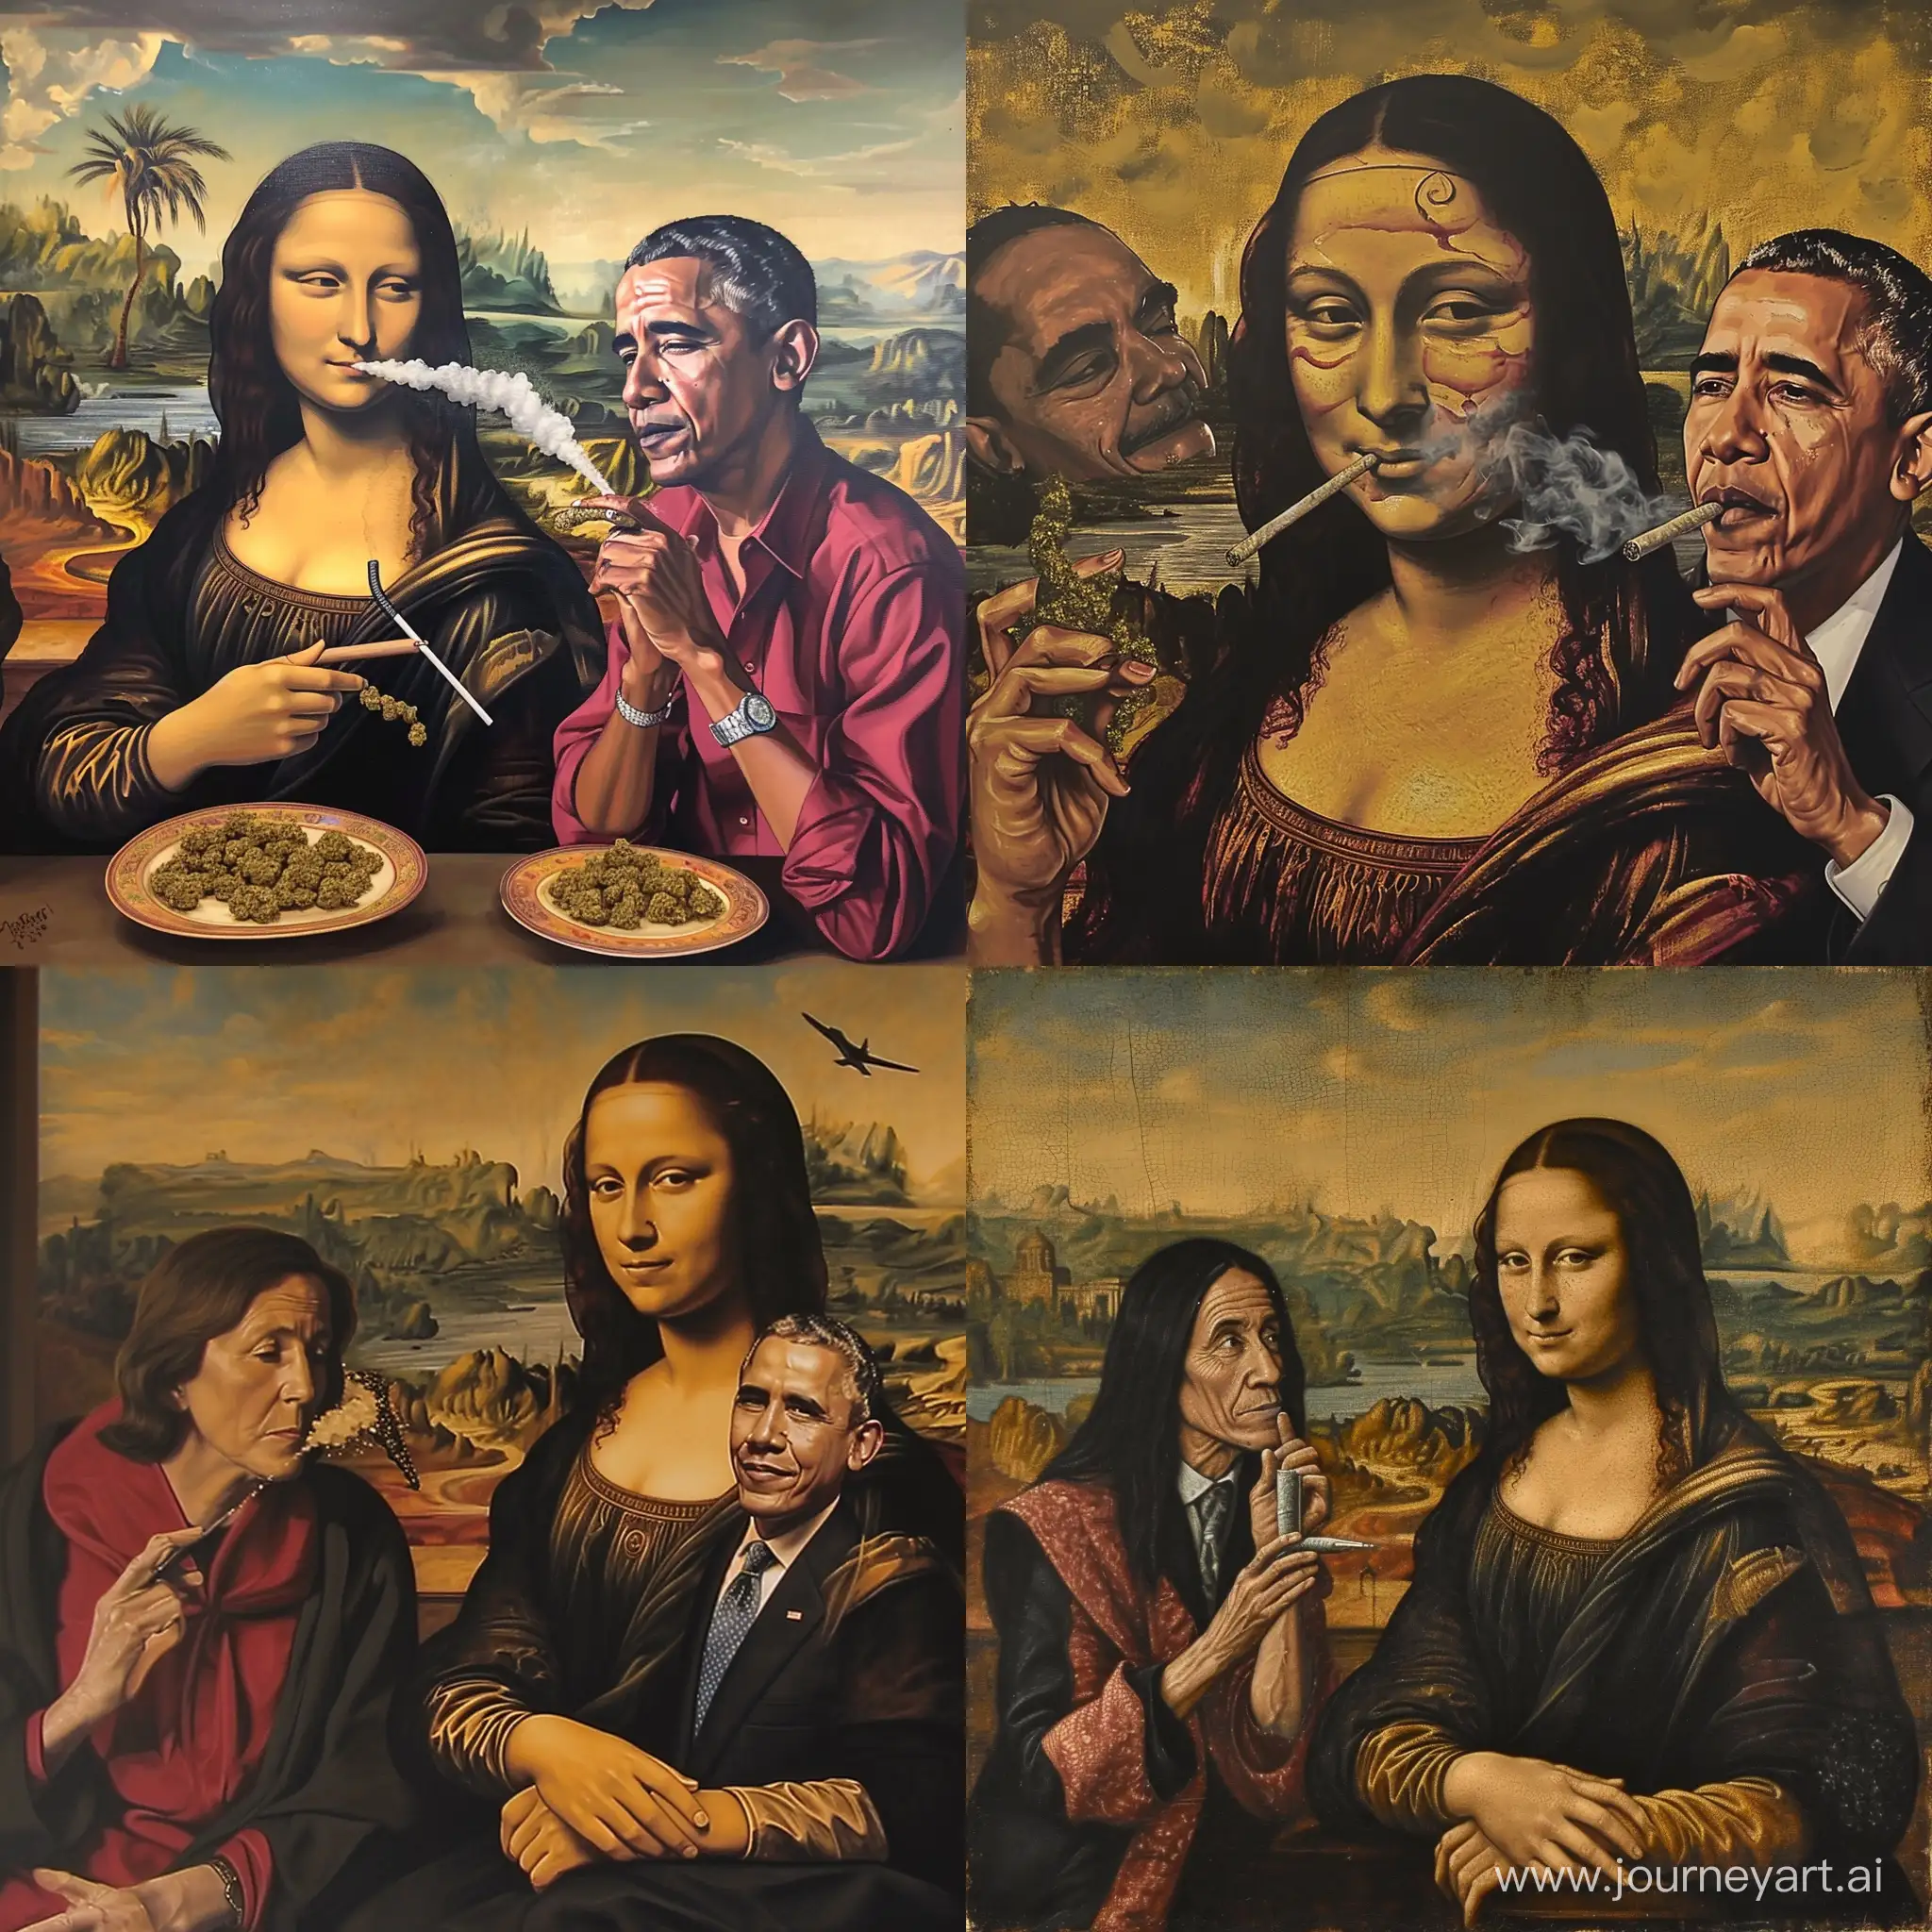 Mona lisa smoking weed with obama